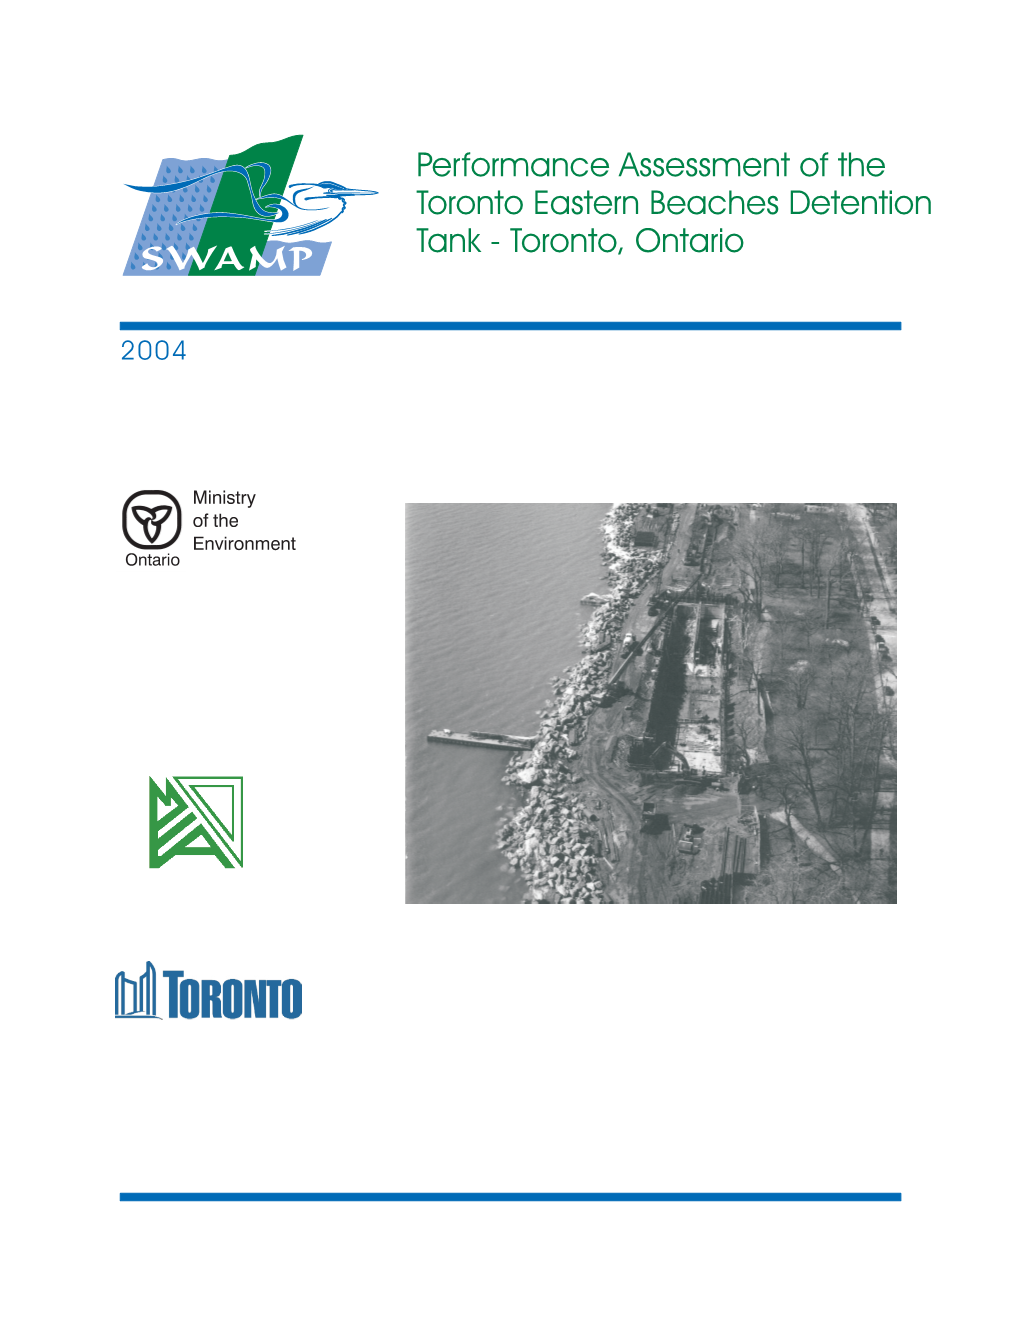 Performance Assessment of the Eastern Beaches Detention Tank - Toronto, Ontario